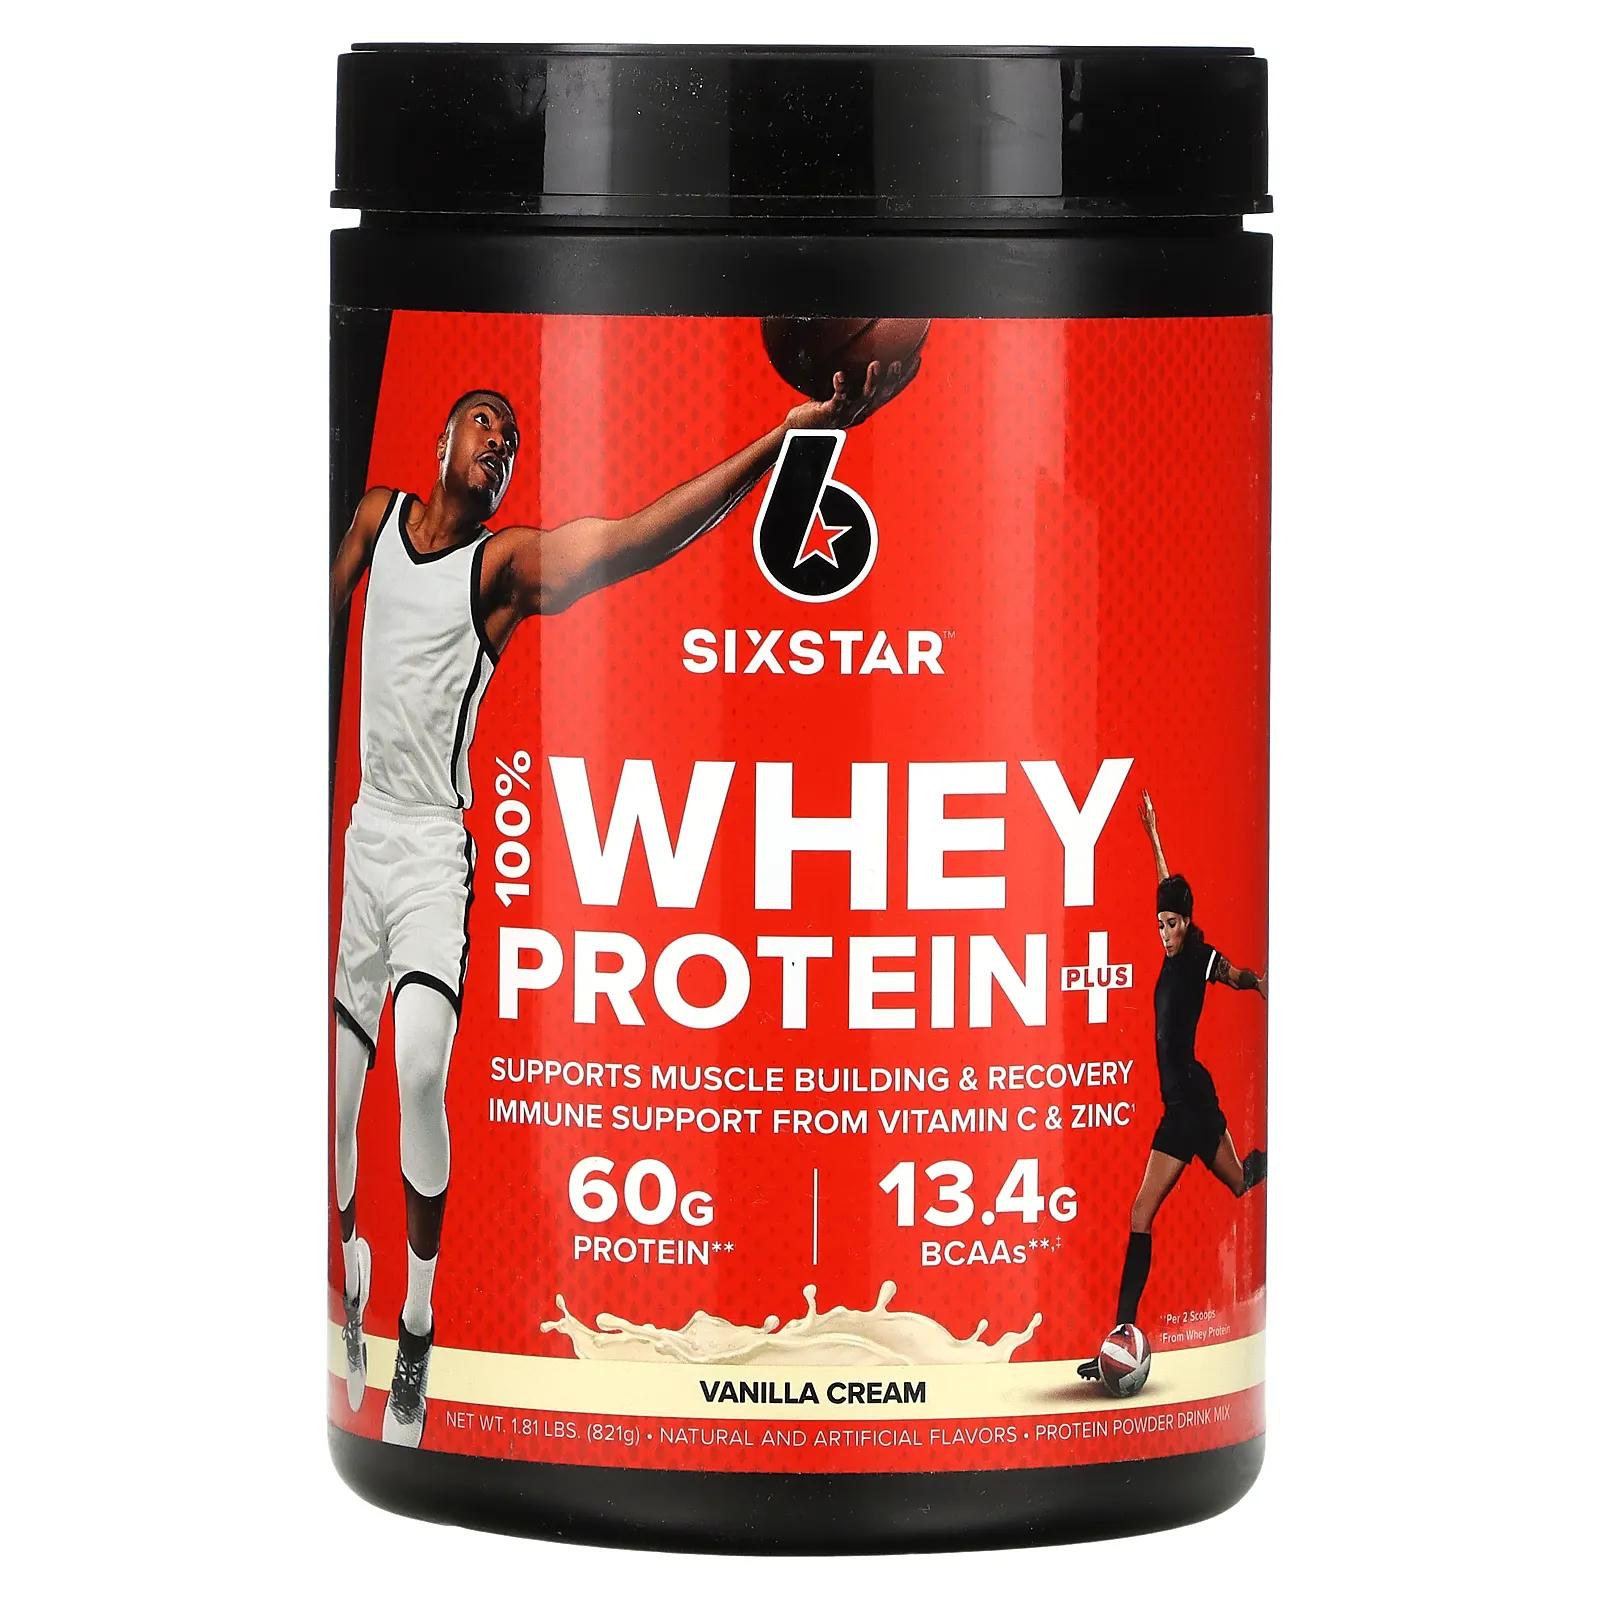 SIXSTAR 100% Whey Protein Plus сывороточный протеин со вкусом ванильного крема 821 г (1,81 фунта) sixstar 100% whey protein plus сывороточный протеин со вкусом ванильного крема 821